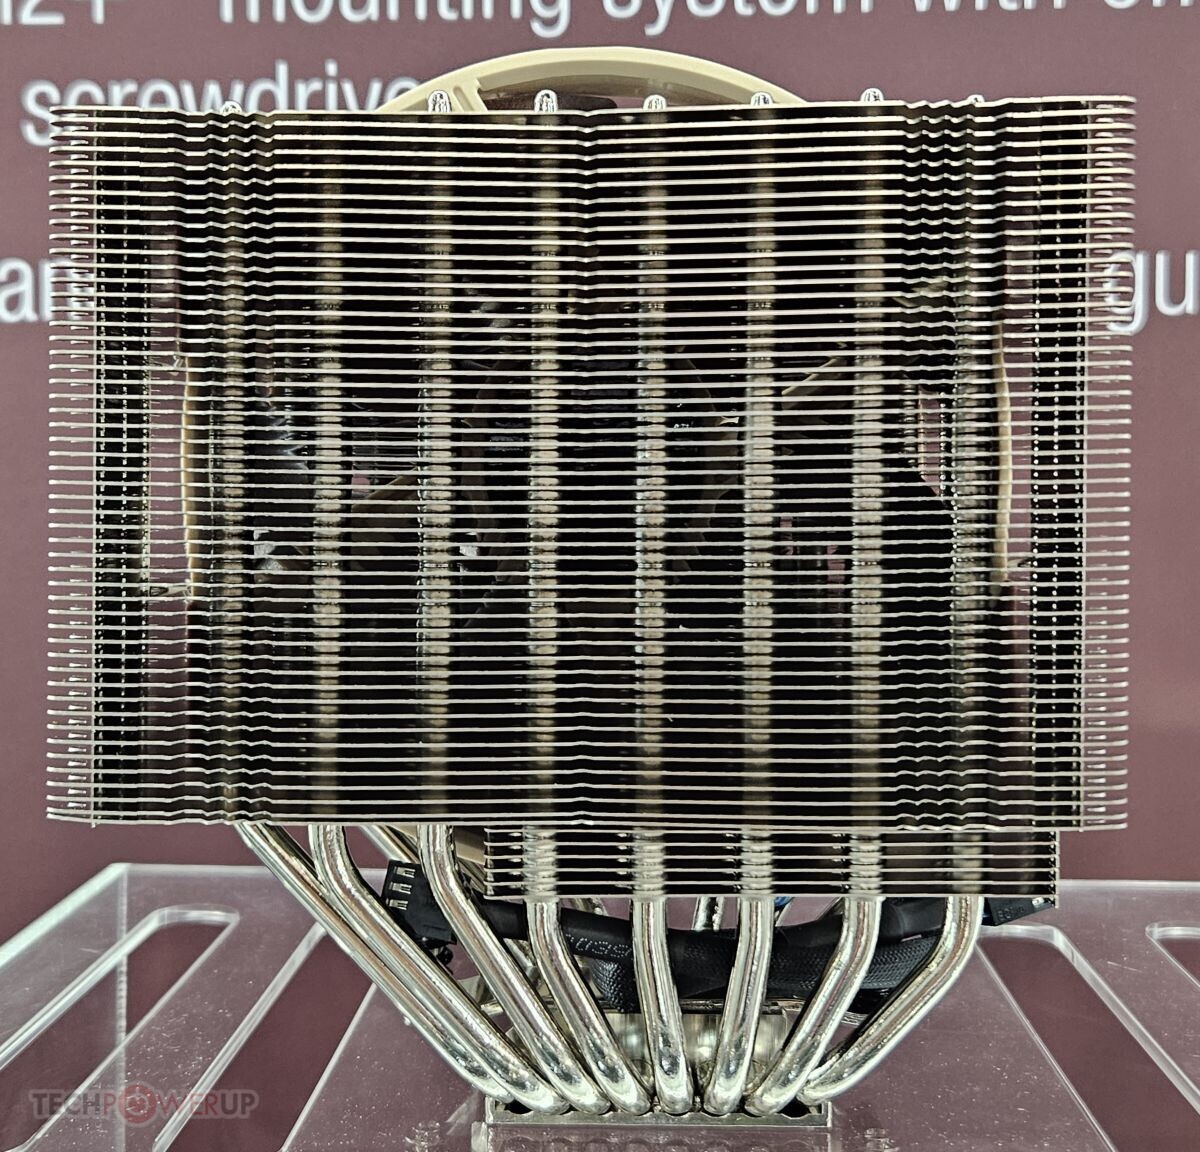 Noctua reveals 2nd generation NH-D15 CPU tower coolers alongside